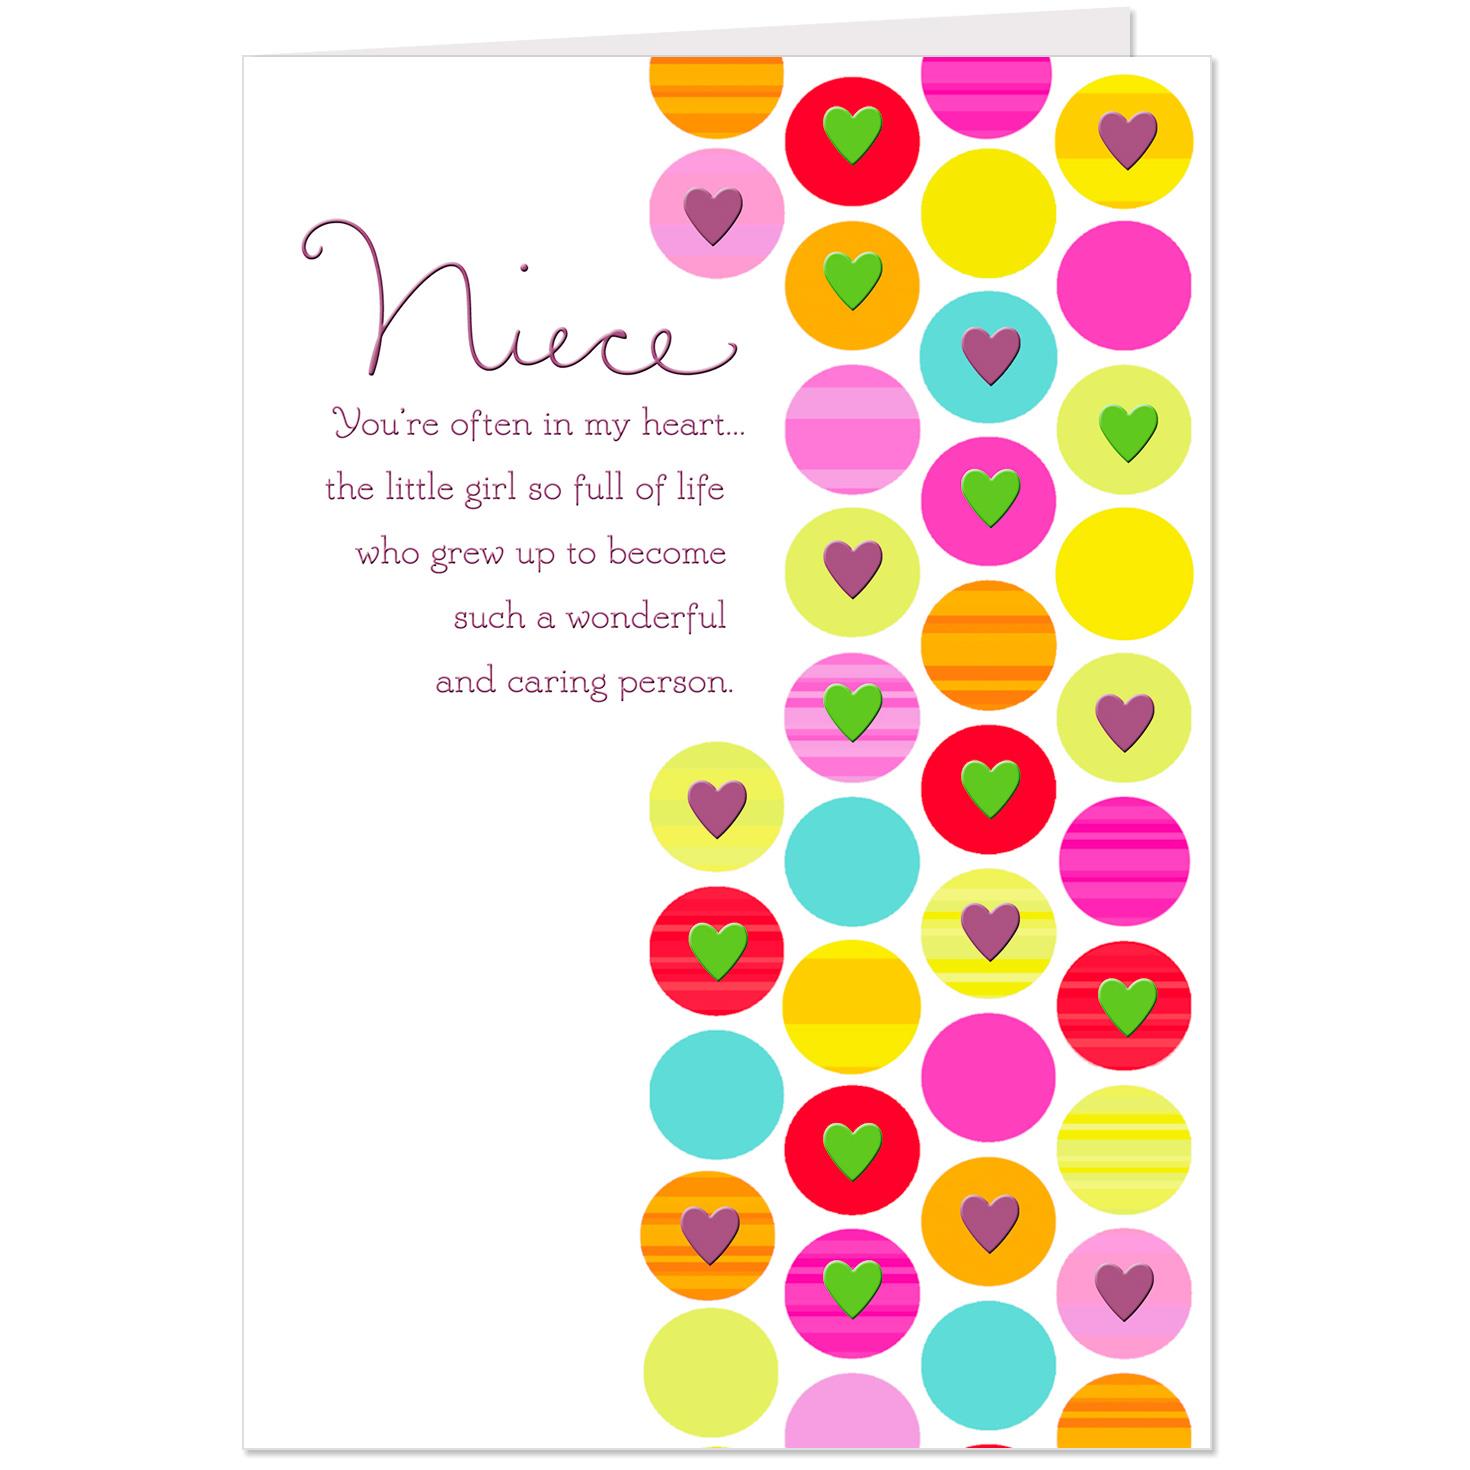 Often in My Heart Birthday Card for Niece - Greeting Cards - Hallmark1470 x 1470